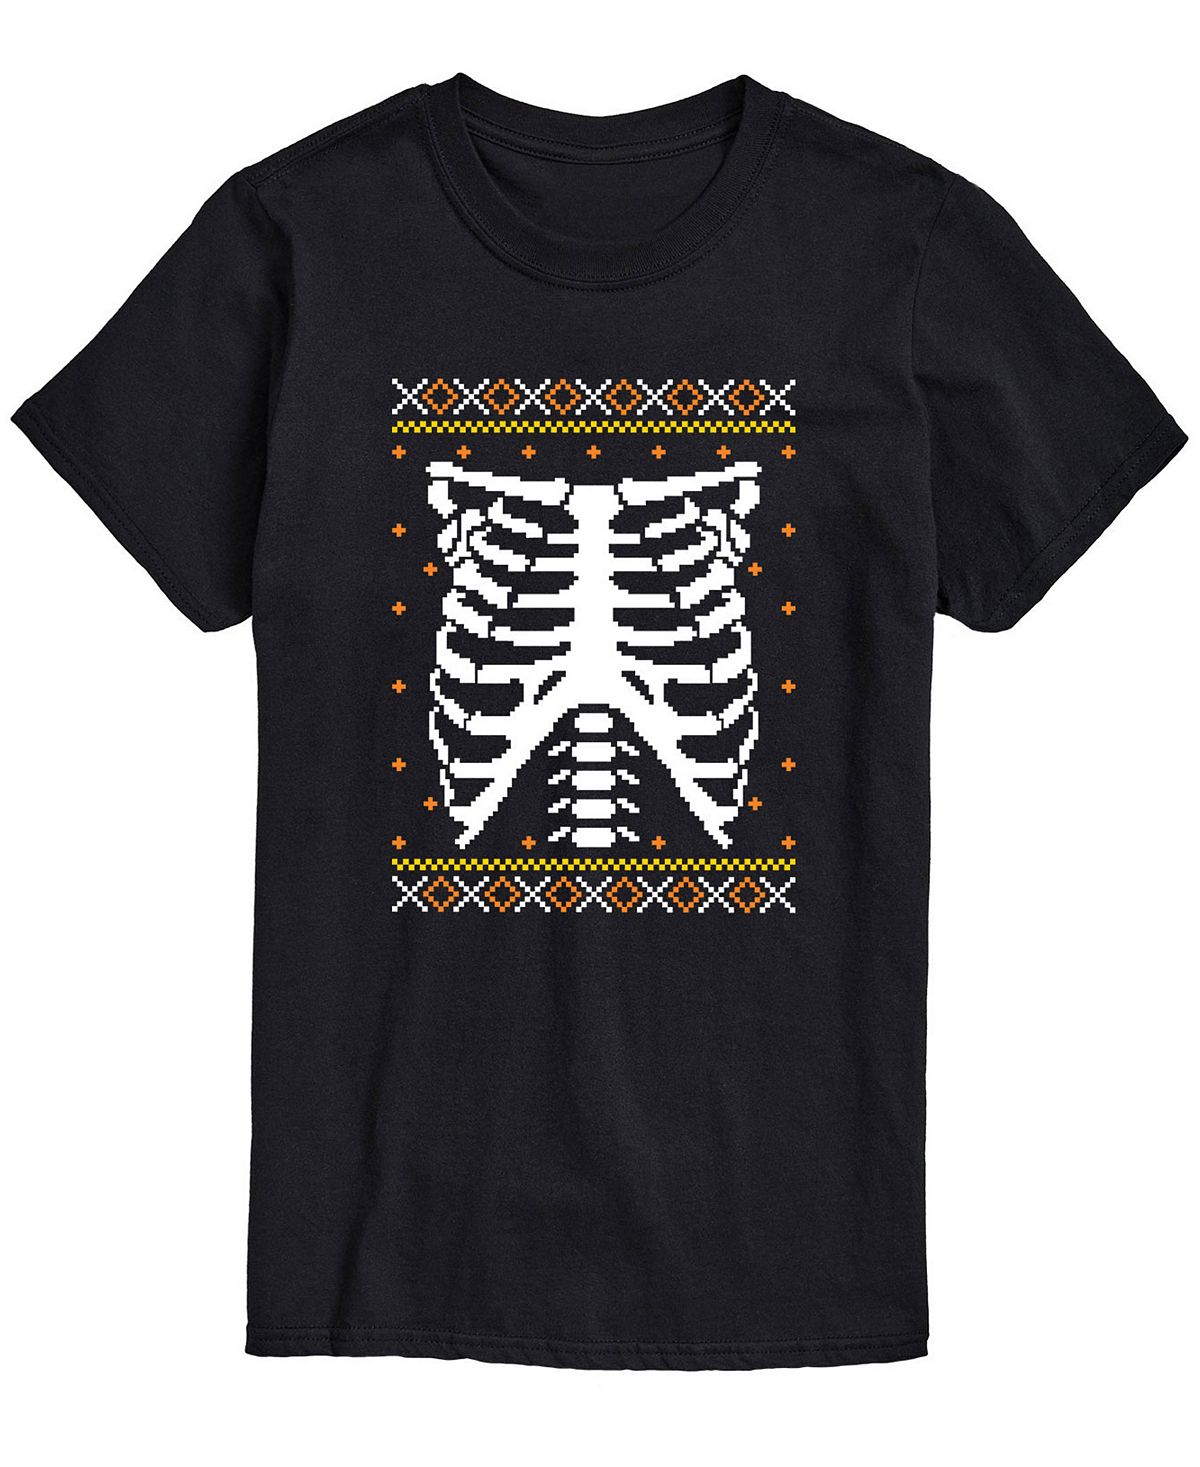 цена Мужская футболка классического кроя skeleton chest AIRWAVES, черный